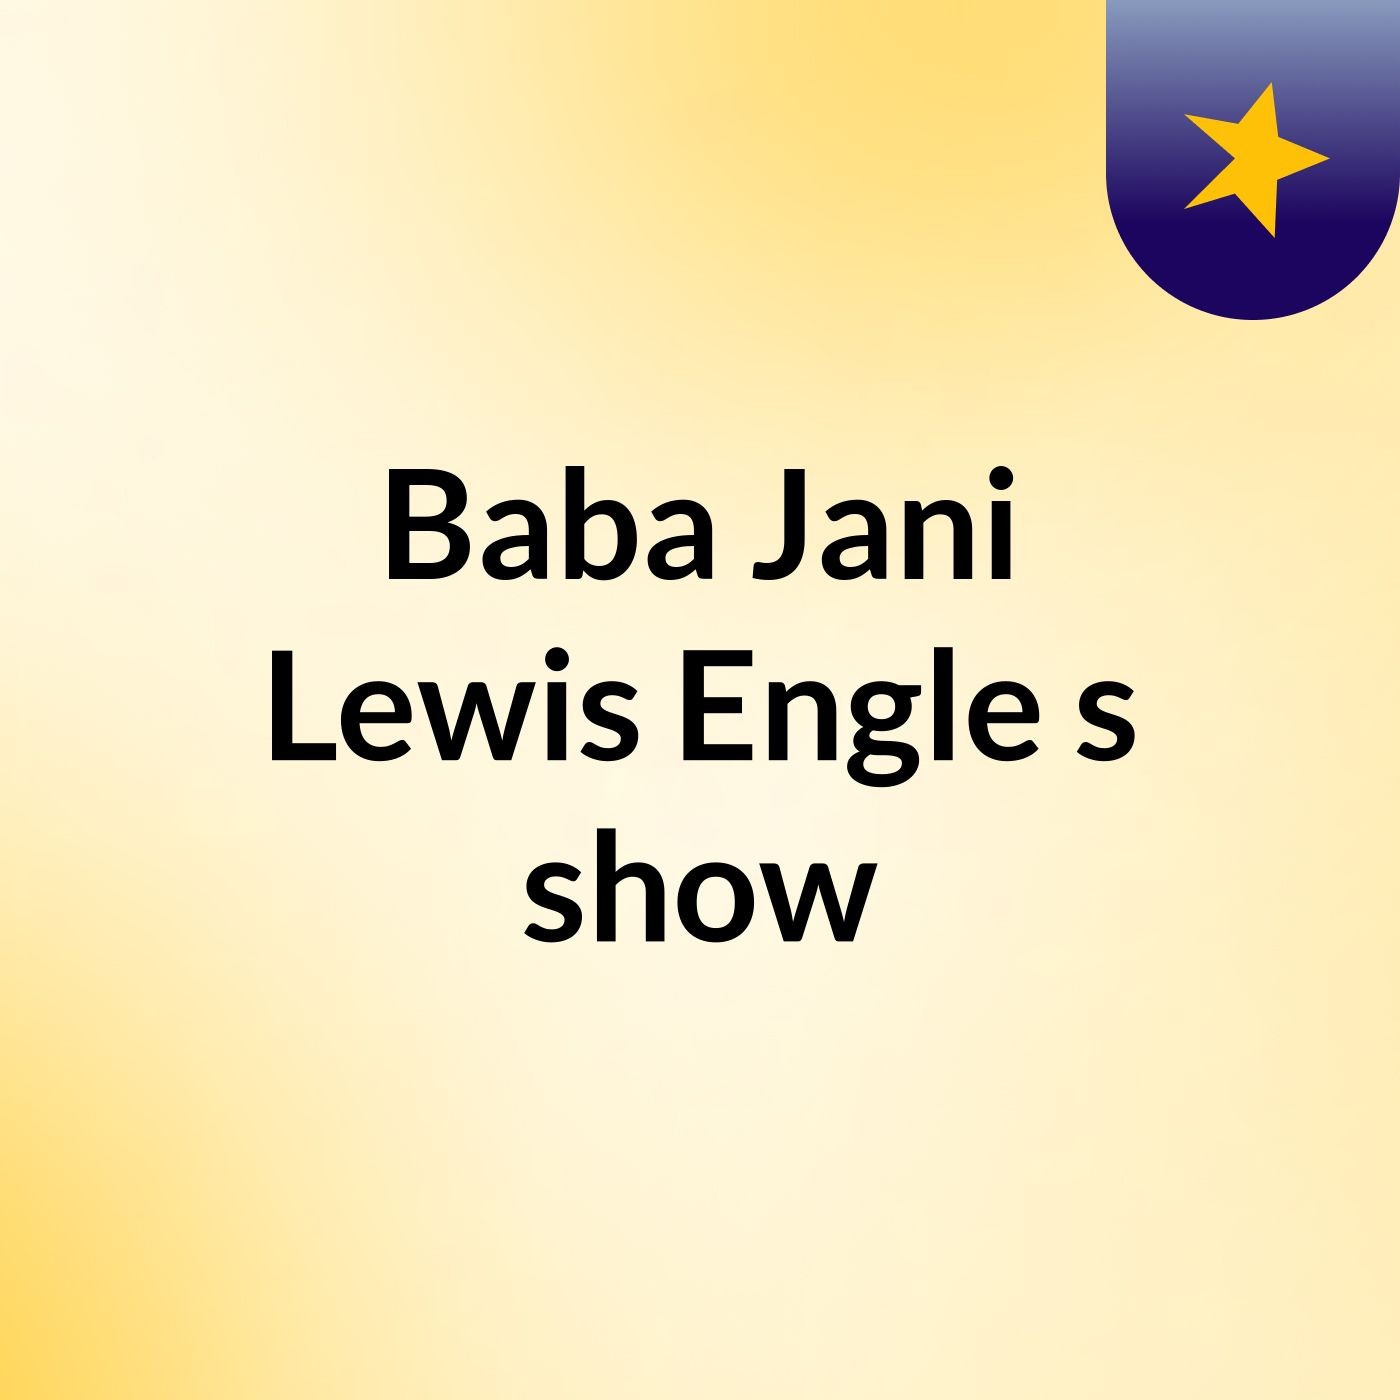 Episode 3 - Baba Jani, Lewis Engle's show